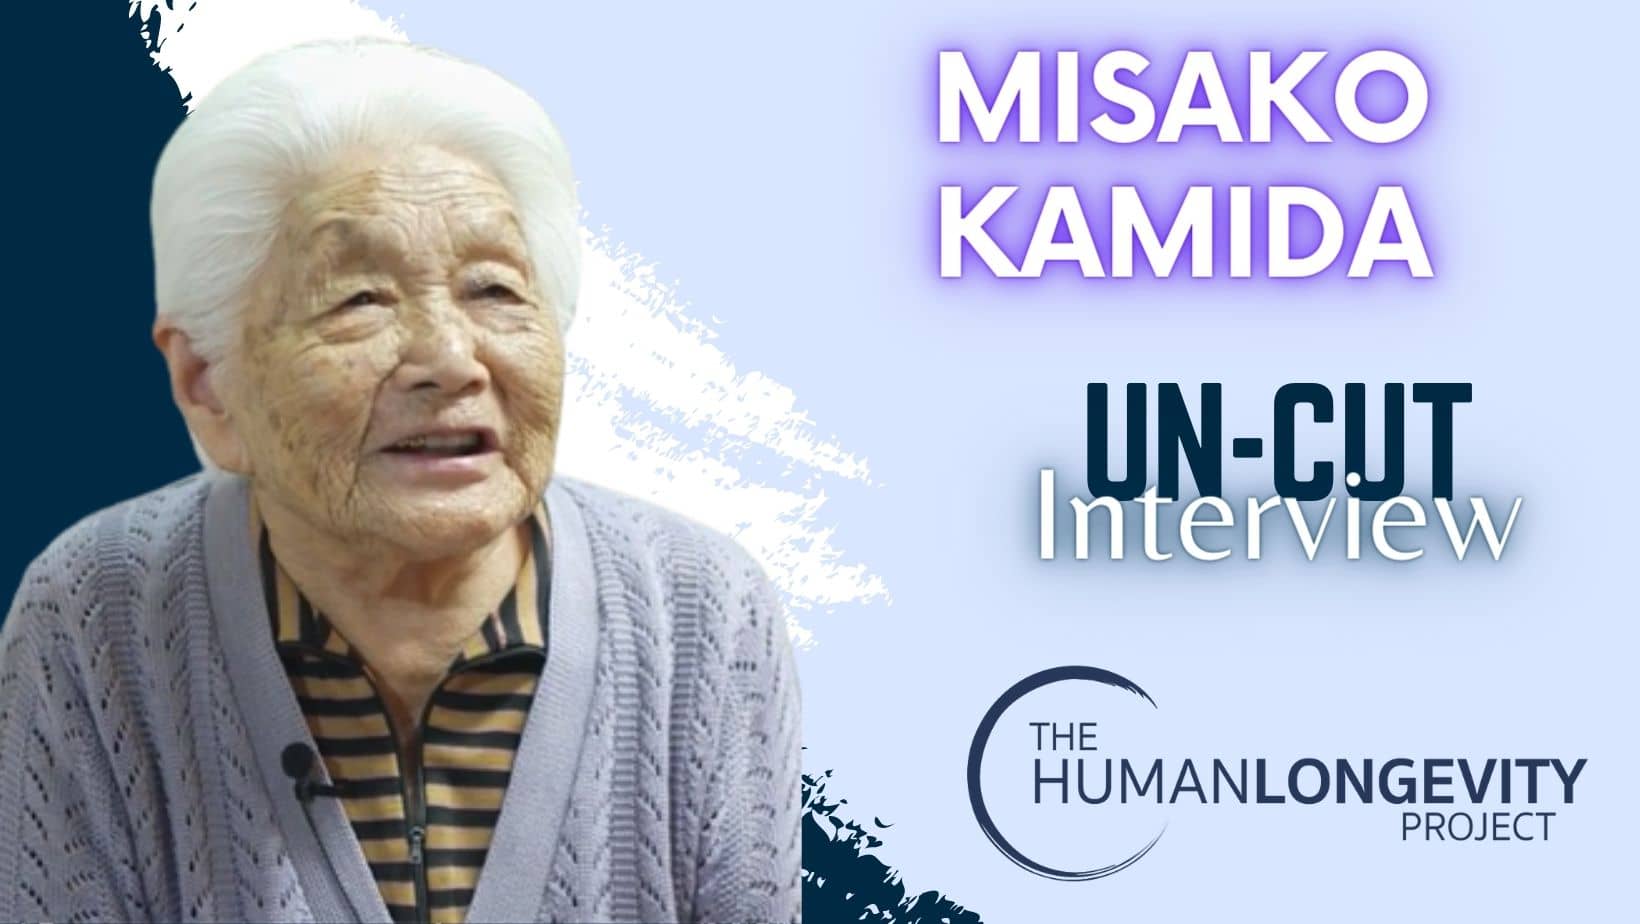 Human Longevity Project Uncut Interview With Misako Kamida